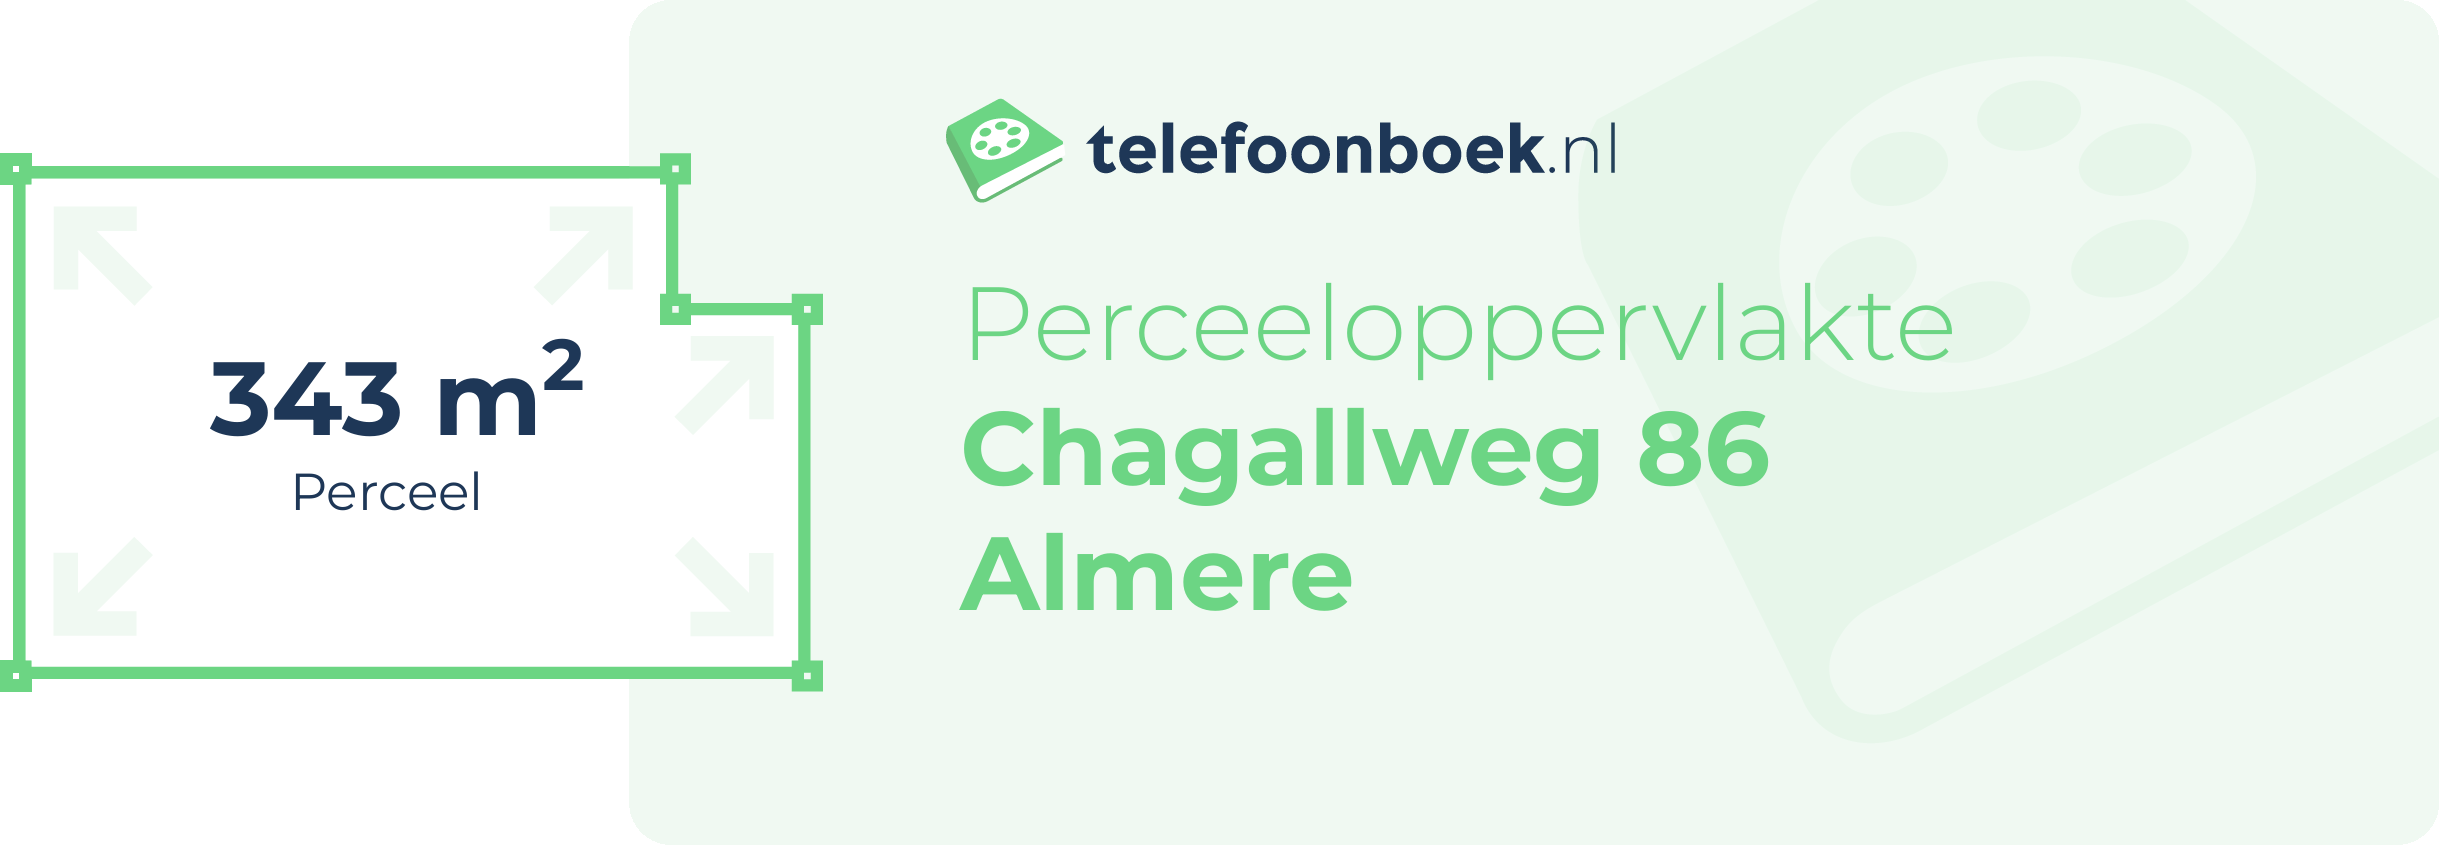 Perceeloppervlakte Chagallweg 86 Almere